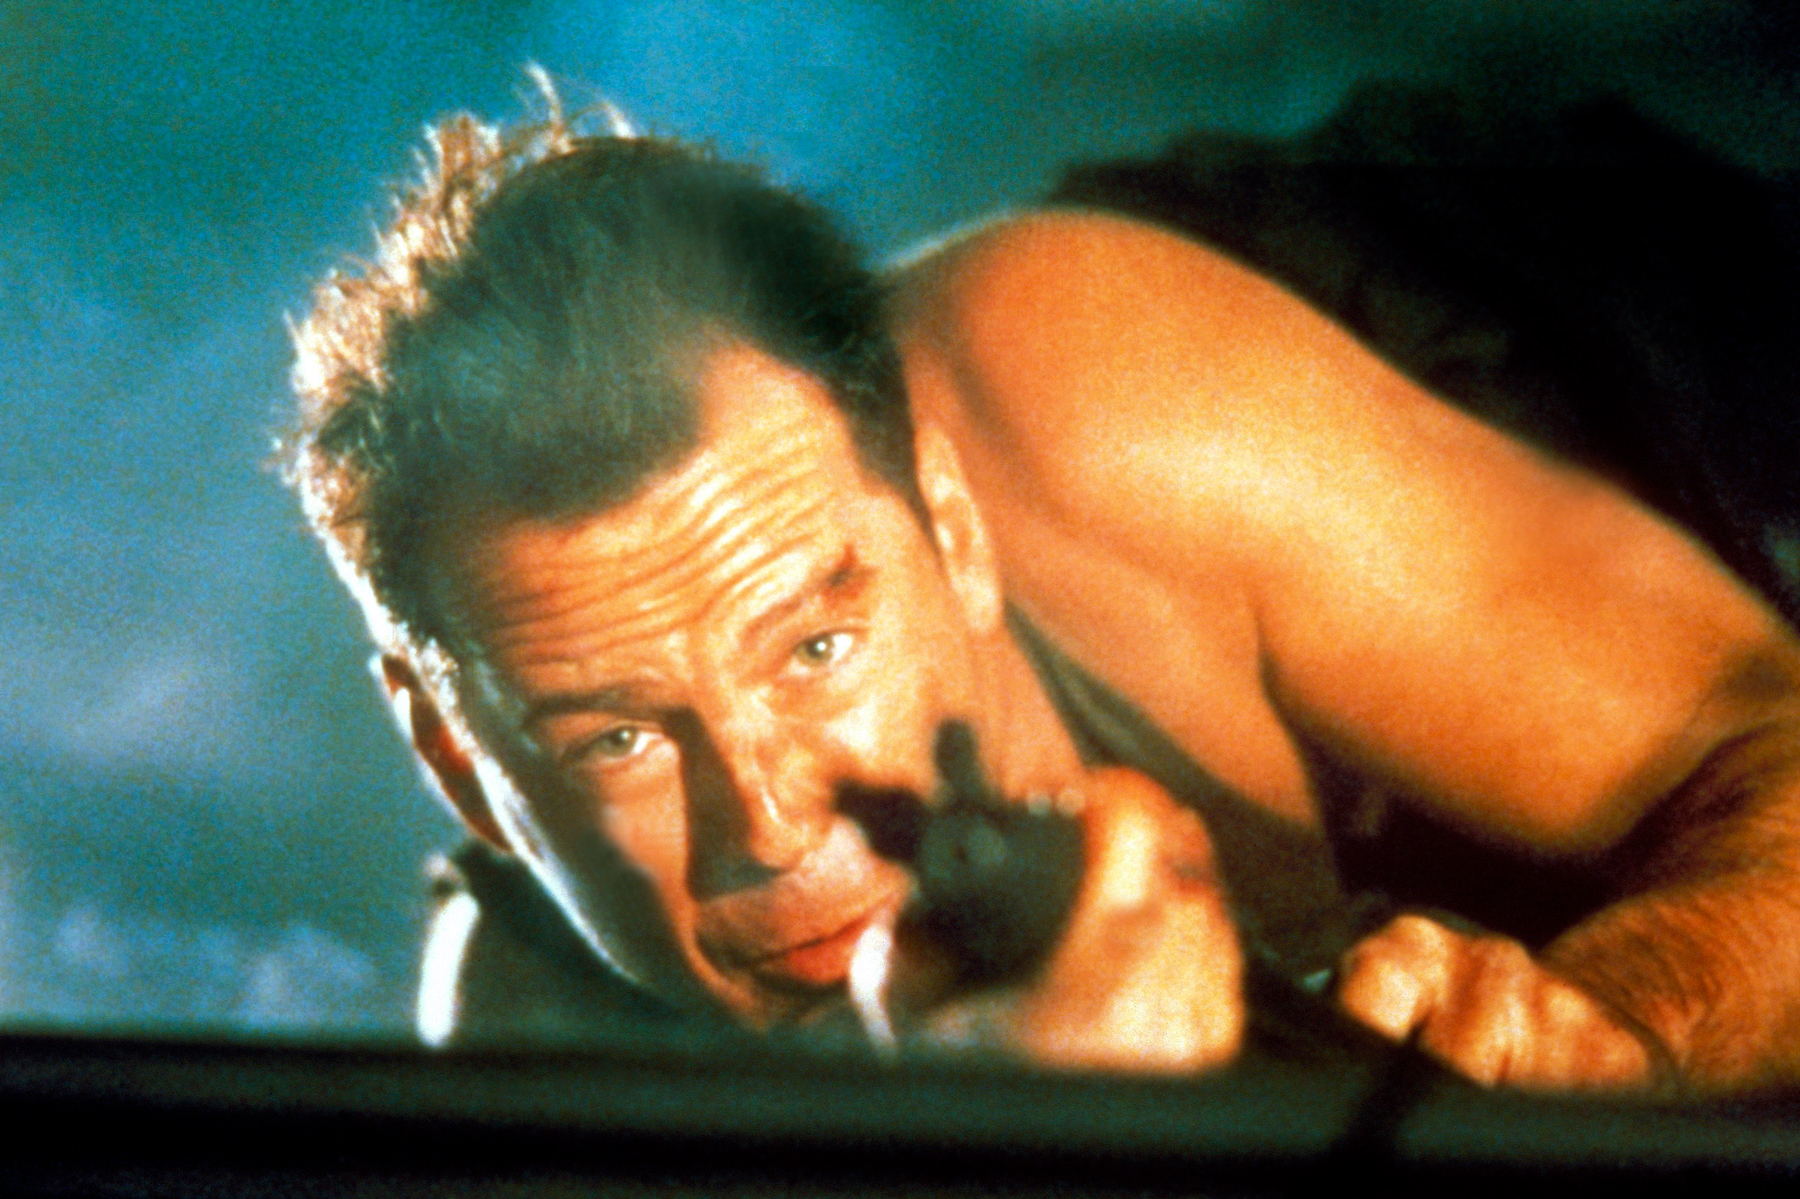 DIE HARD, Bruce Willis, 1988, TM & Copyright (c) 20th Century Fox Film Corp./courtesy Everett Collection